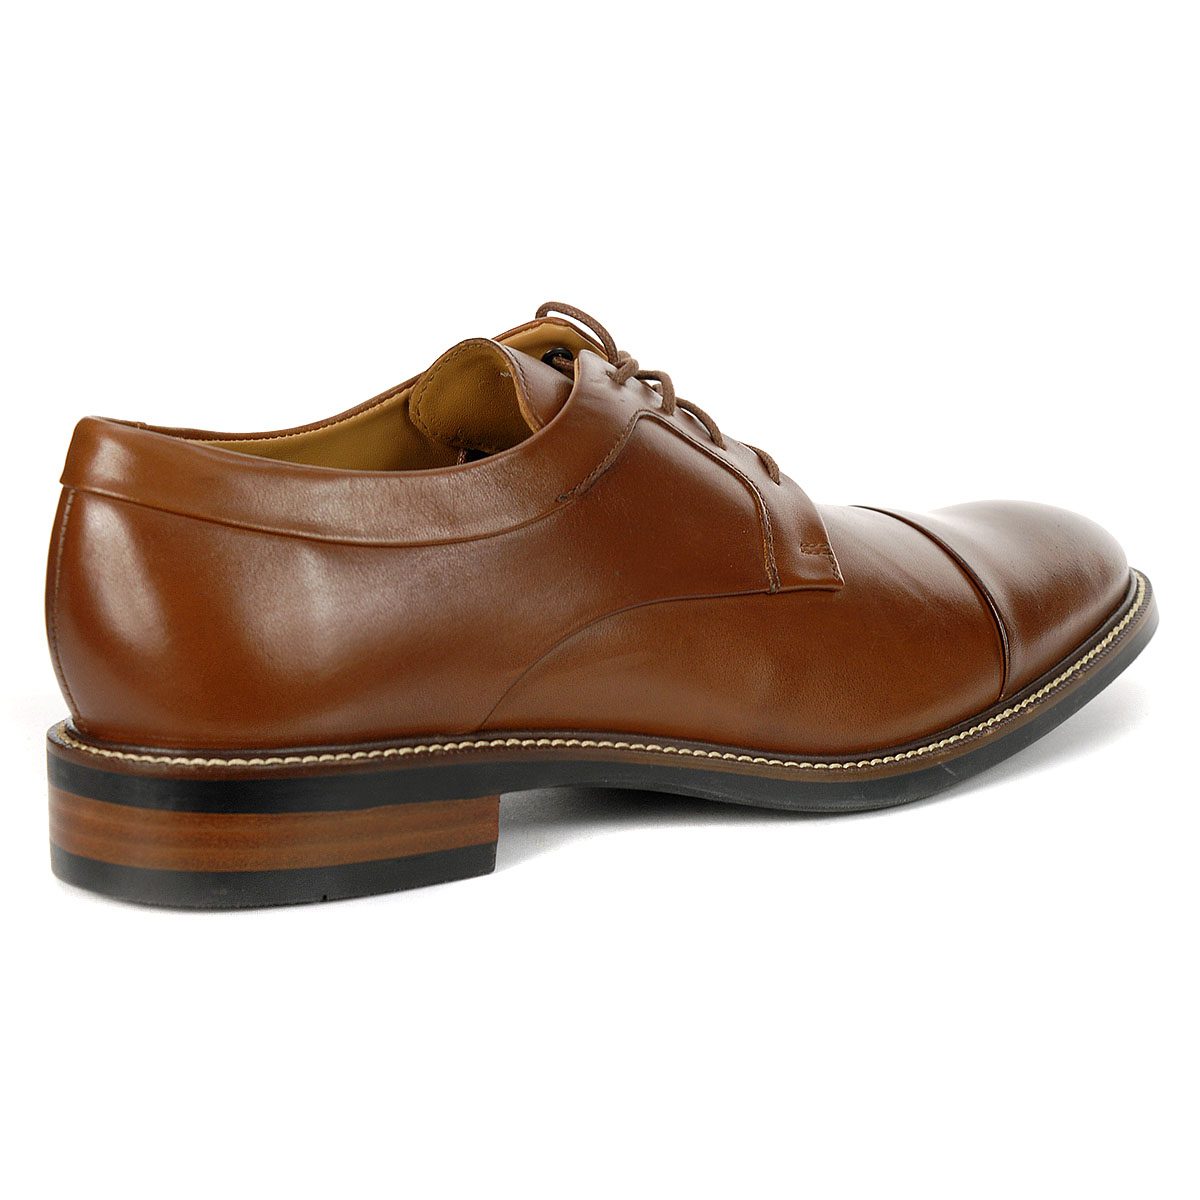 Cole Haan Men's Warren Cap Toe Oxford British Tan Leather Dress Shoes ...